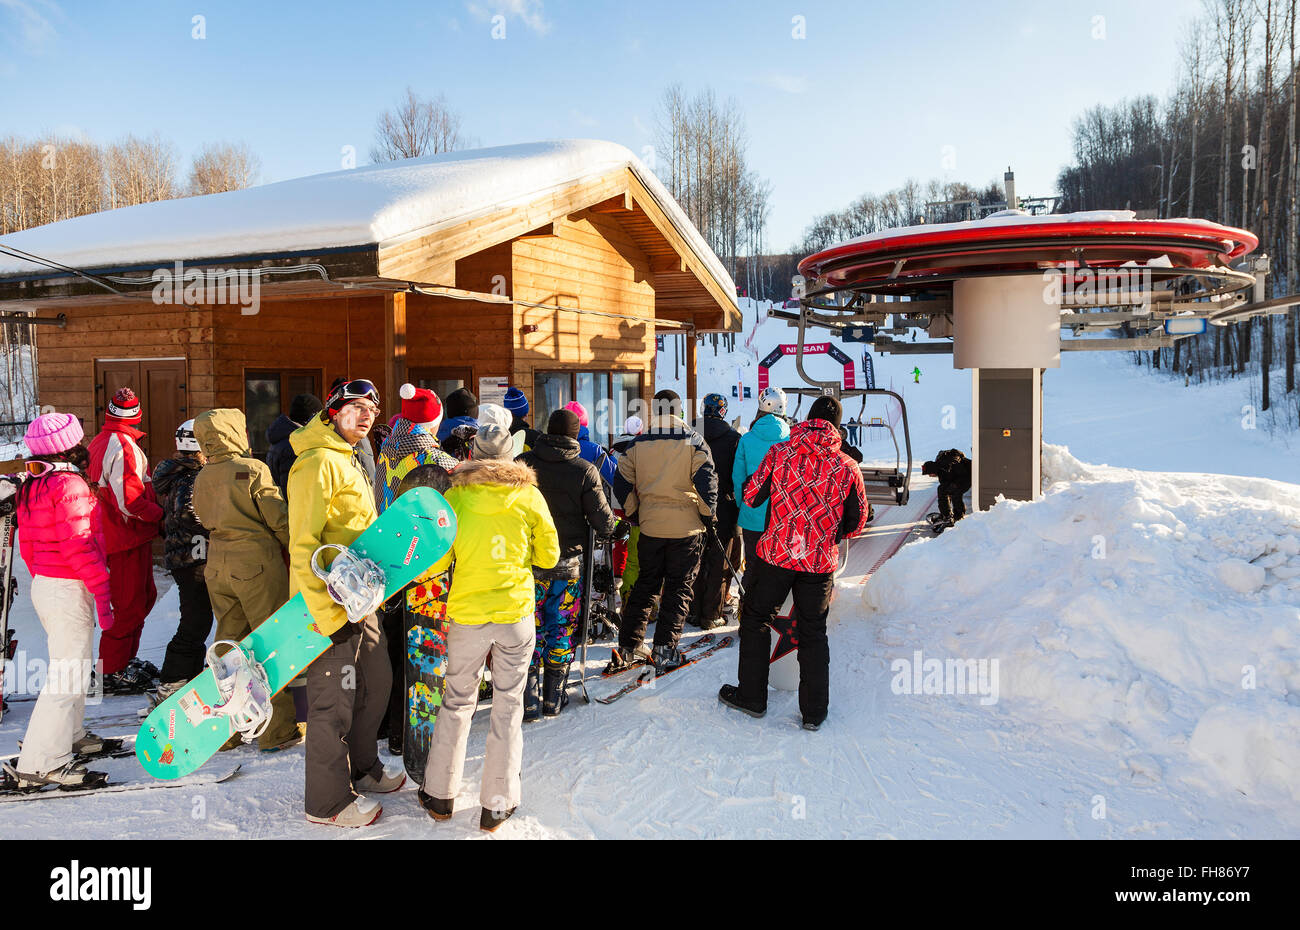 Le persone si mettono in linea su сhairlift in 'Krasnaya Glinka' mountain ski resort in inverno Foto Stock